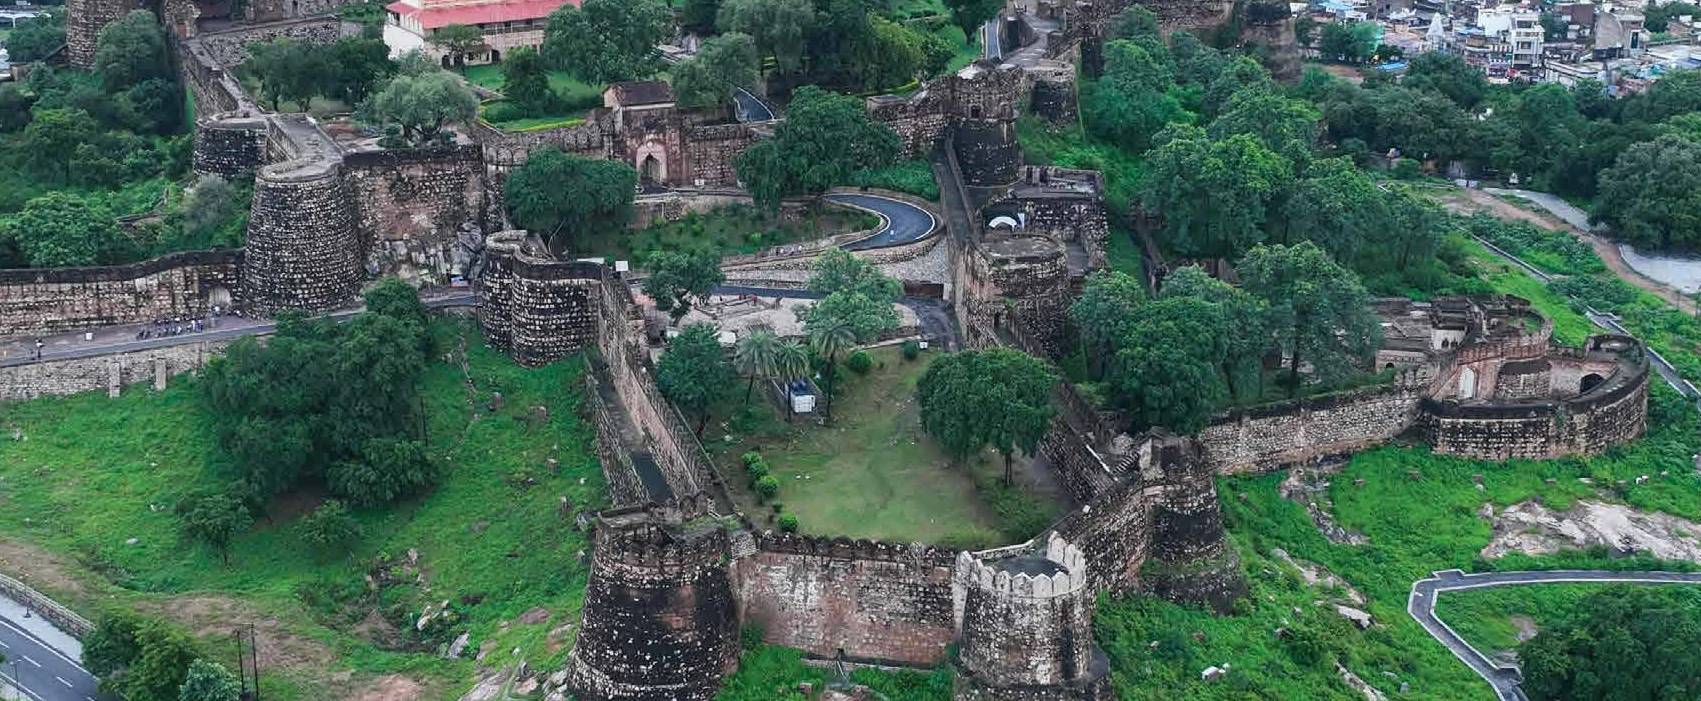 Jhansi-Fort